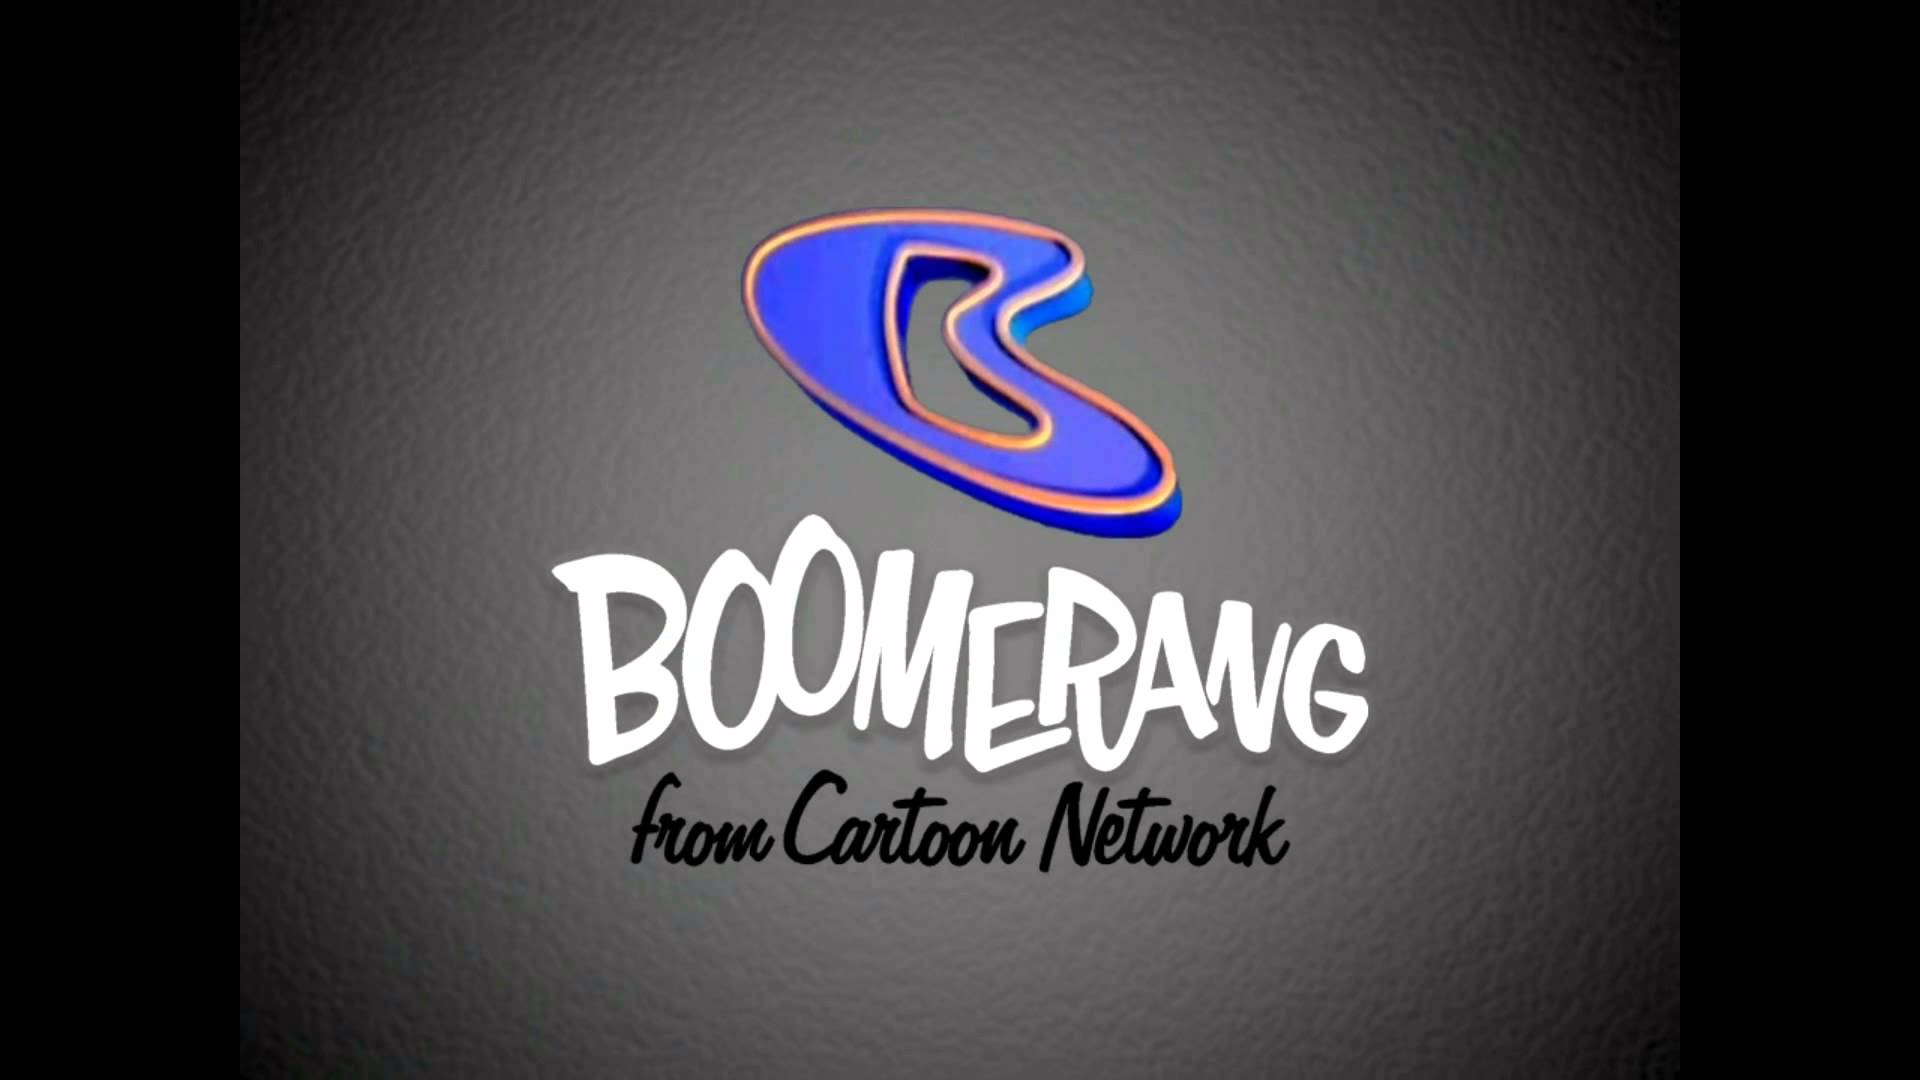 Old CN Logo - Boomerang from cartoon network Logos